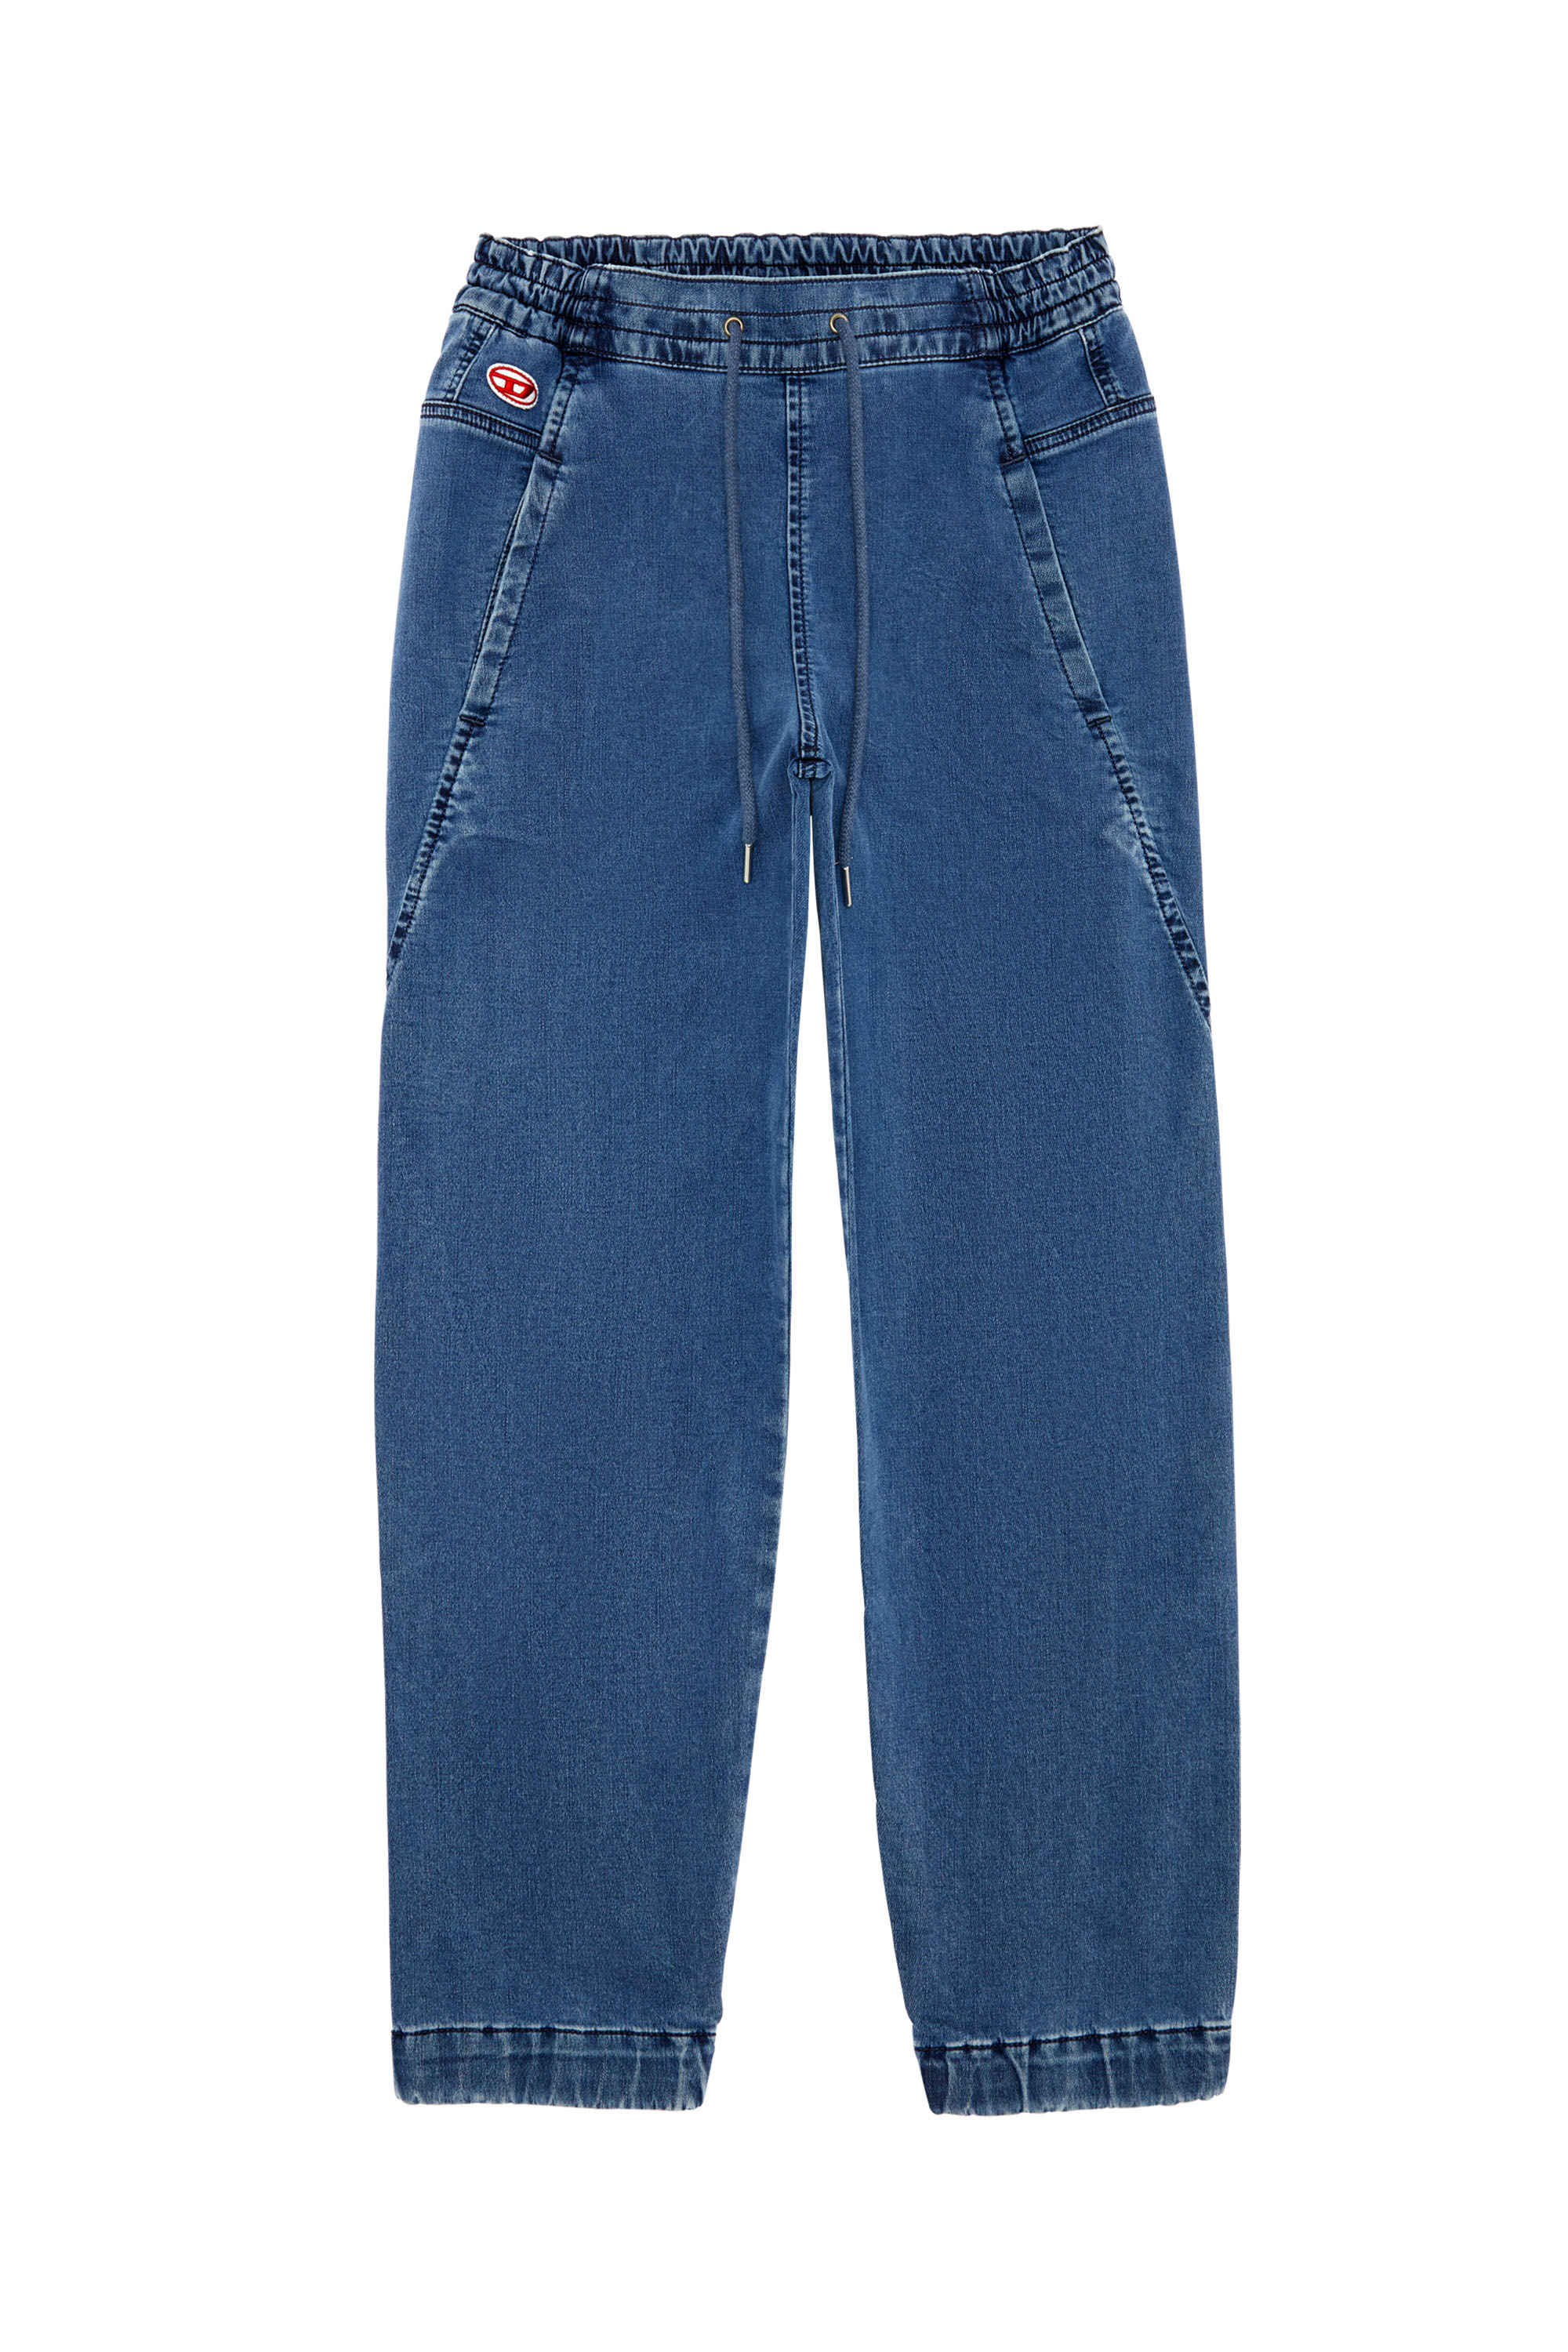 Krailey JoggJeans® 069ZK Boyfriend, Medium blue - Jeans